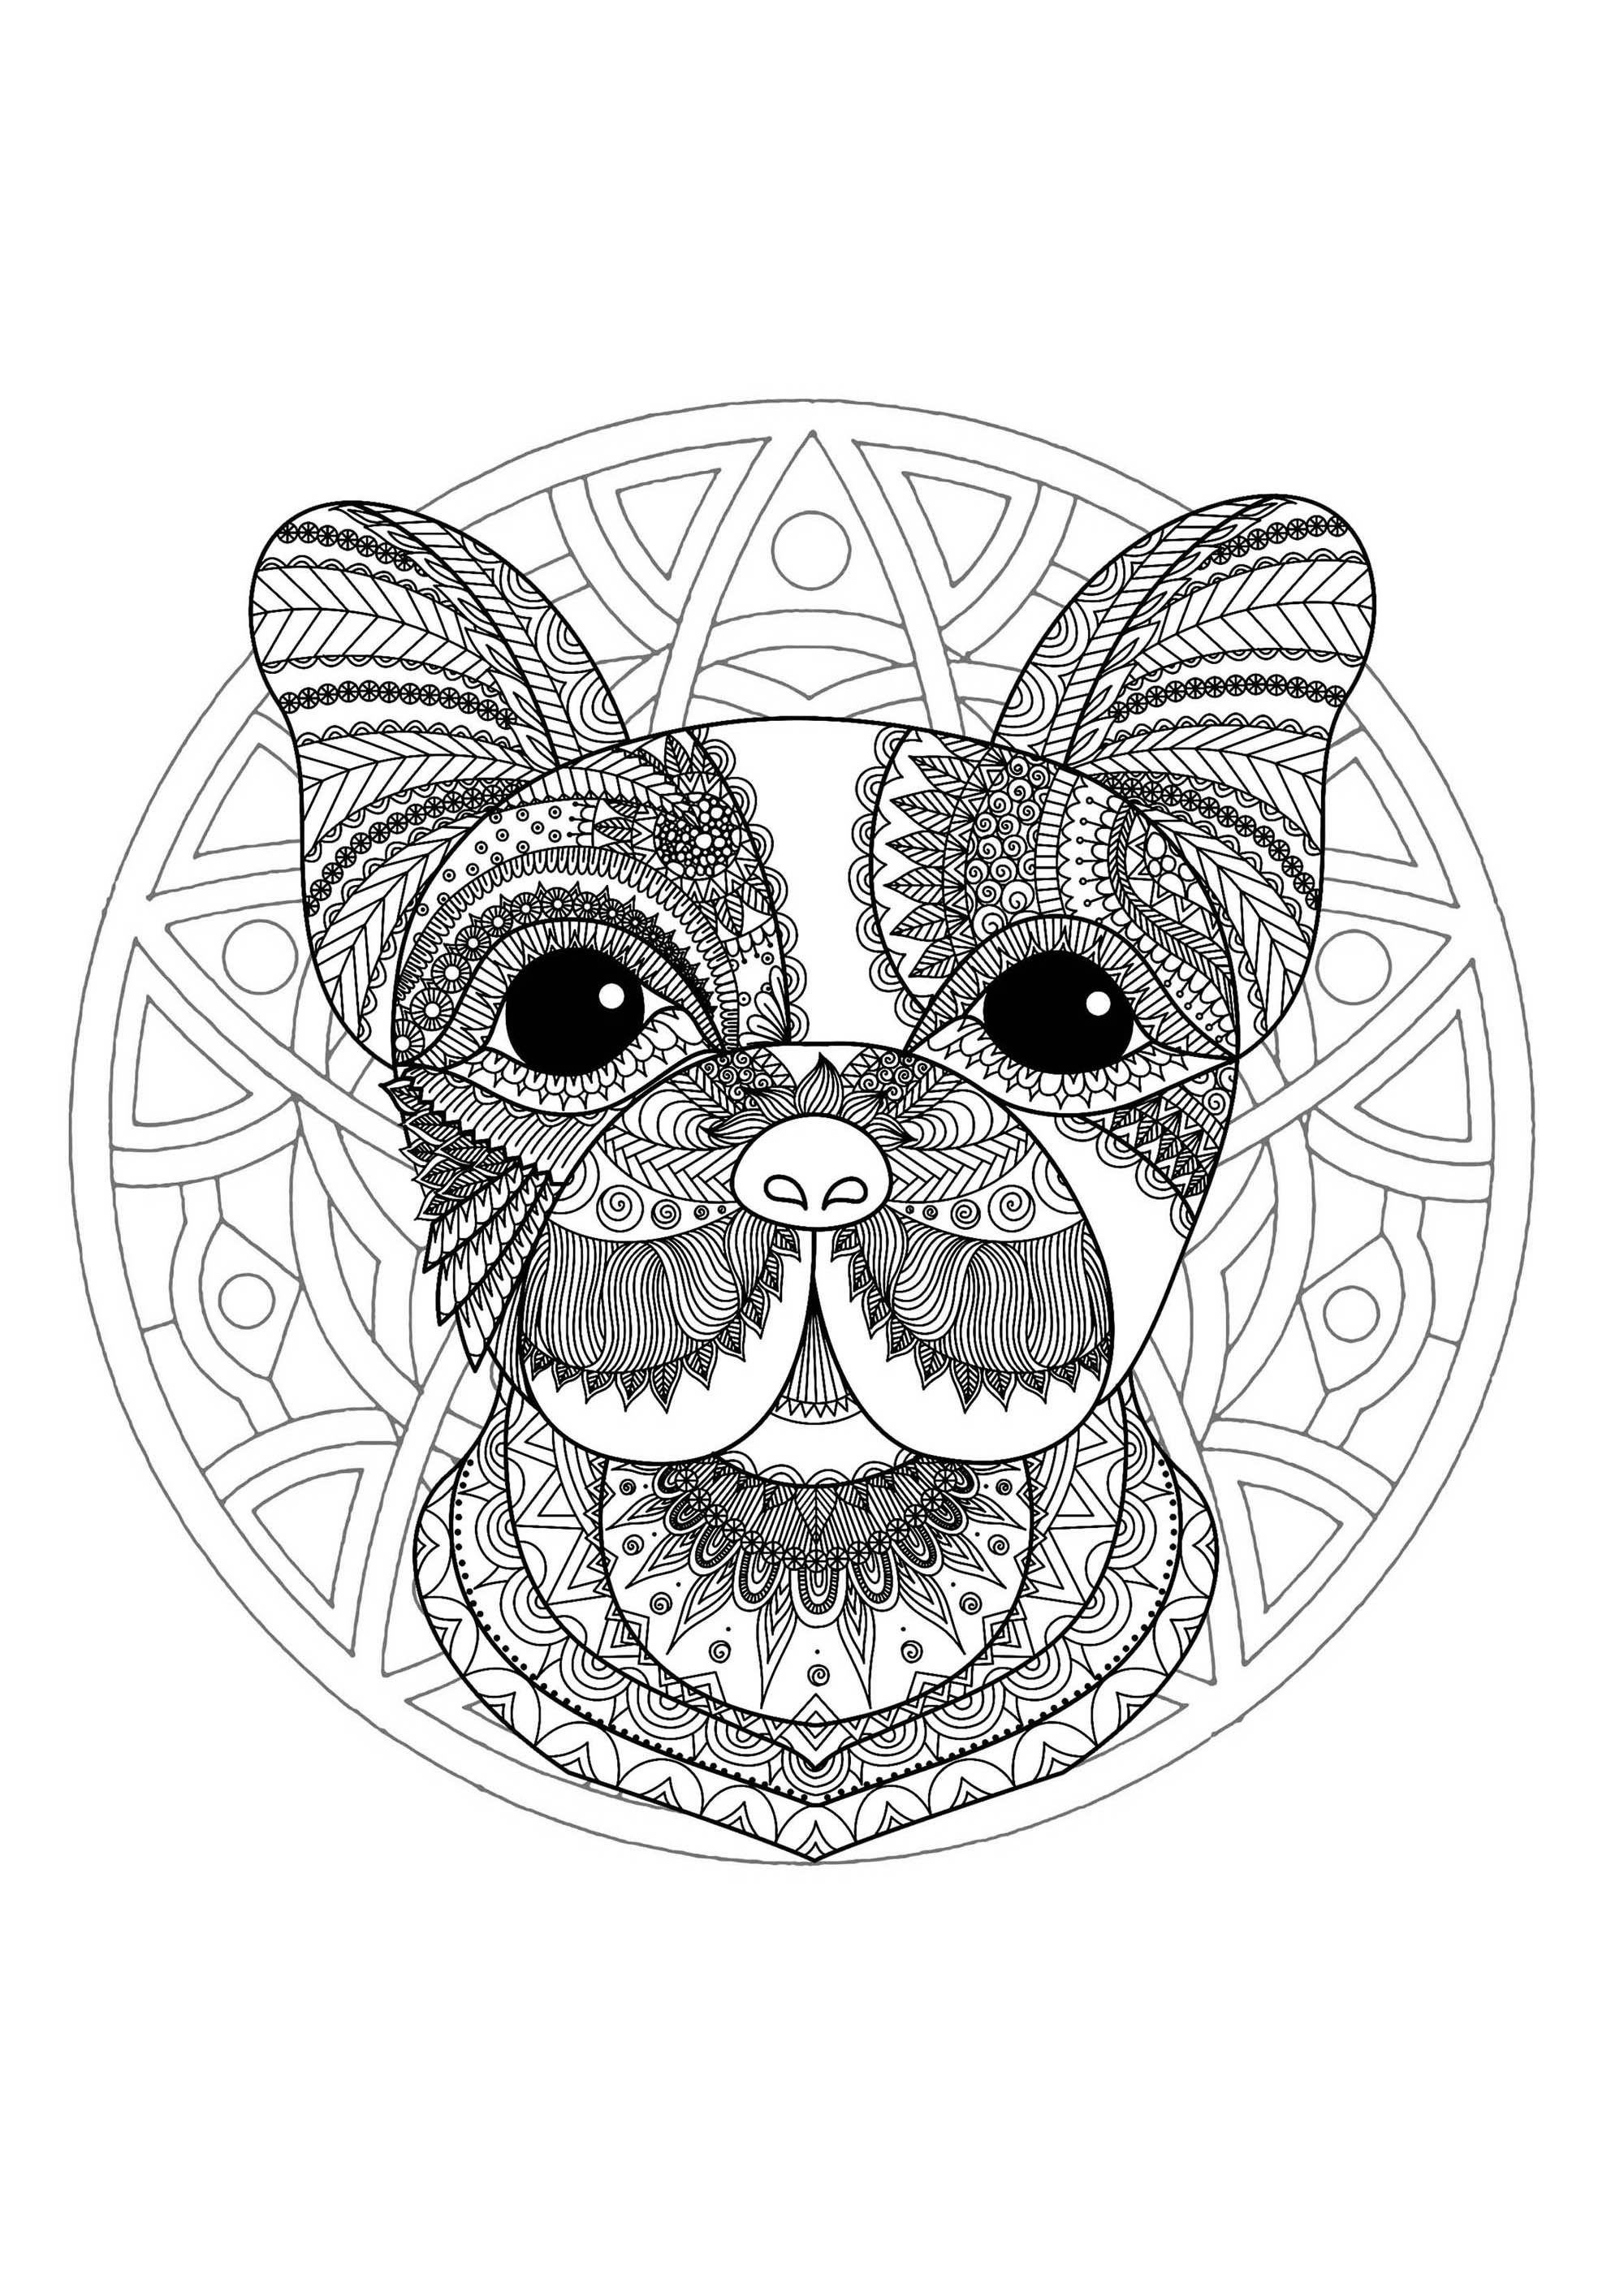 Mandala With Funny Dog Head And Elegant Patterns Mandalas Adult